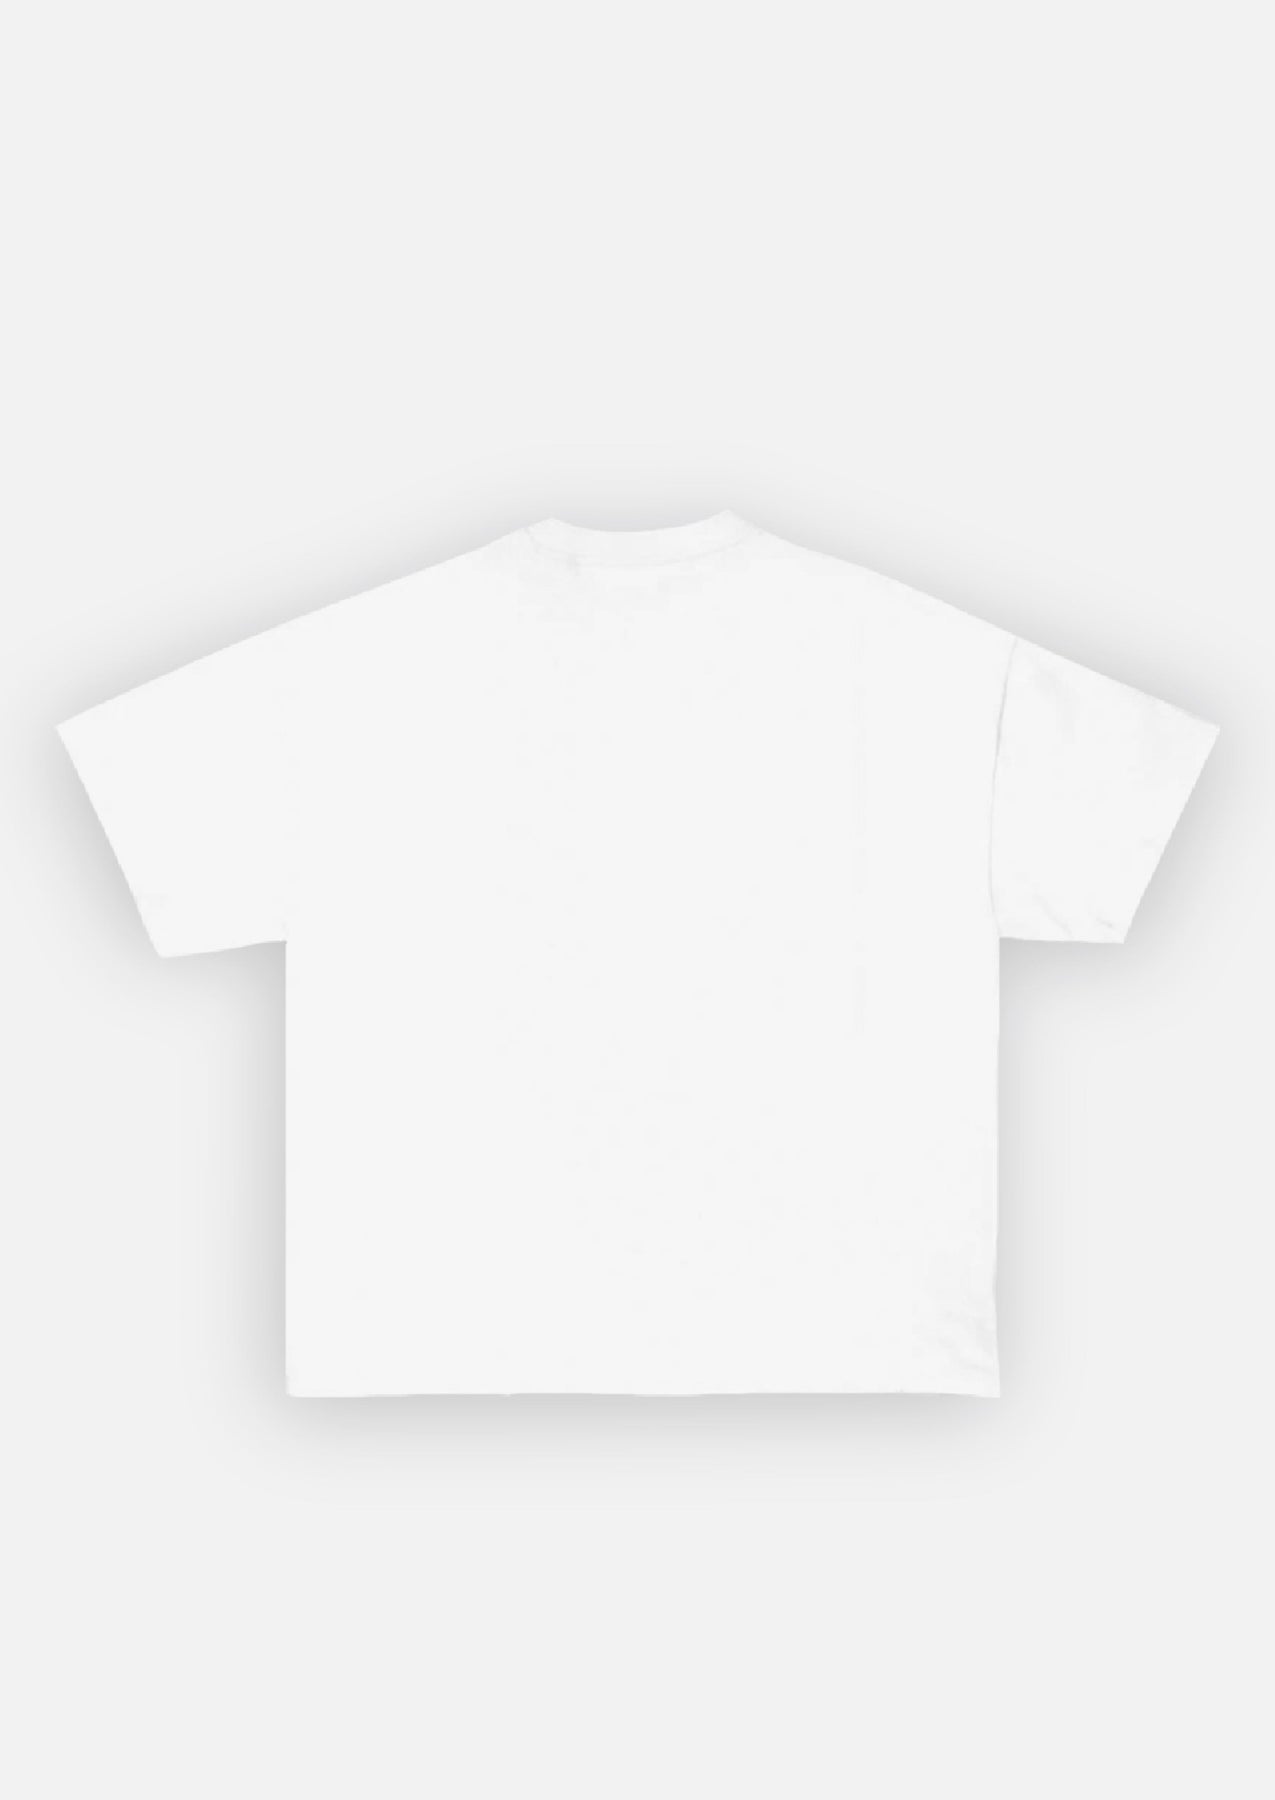 Rowdy | Jackson Hole t-shirts – Diamond Cross Ranch